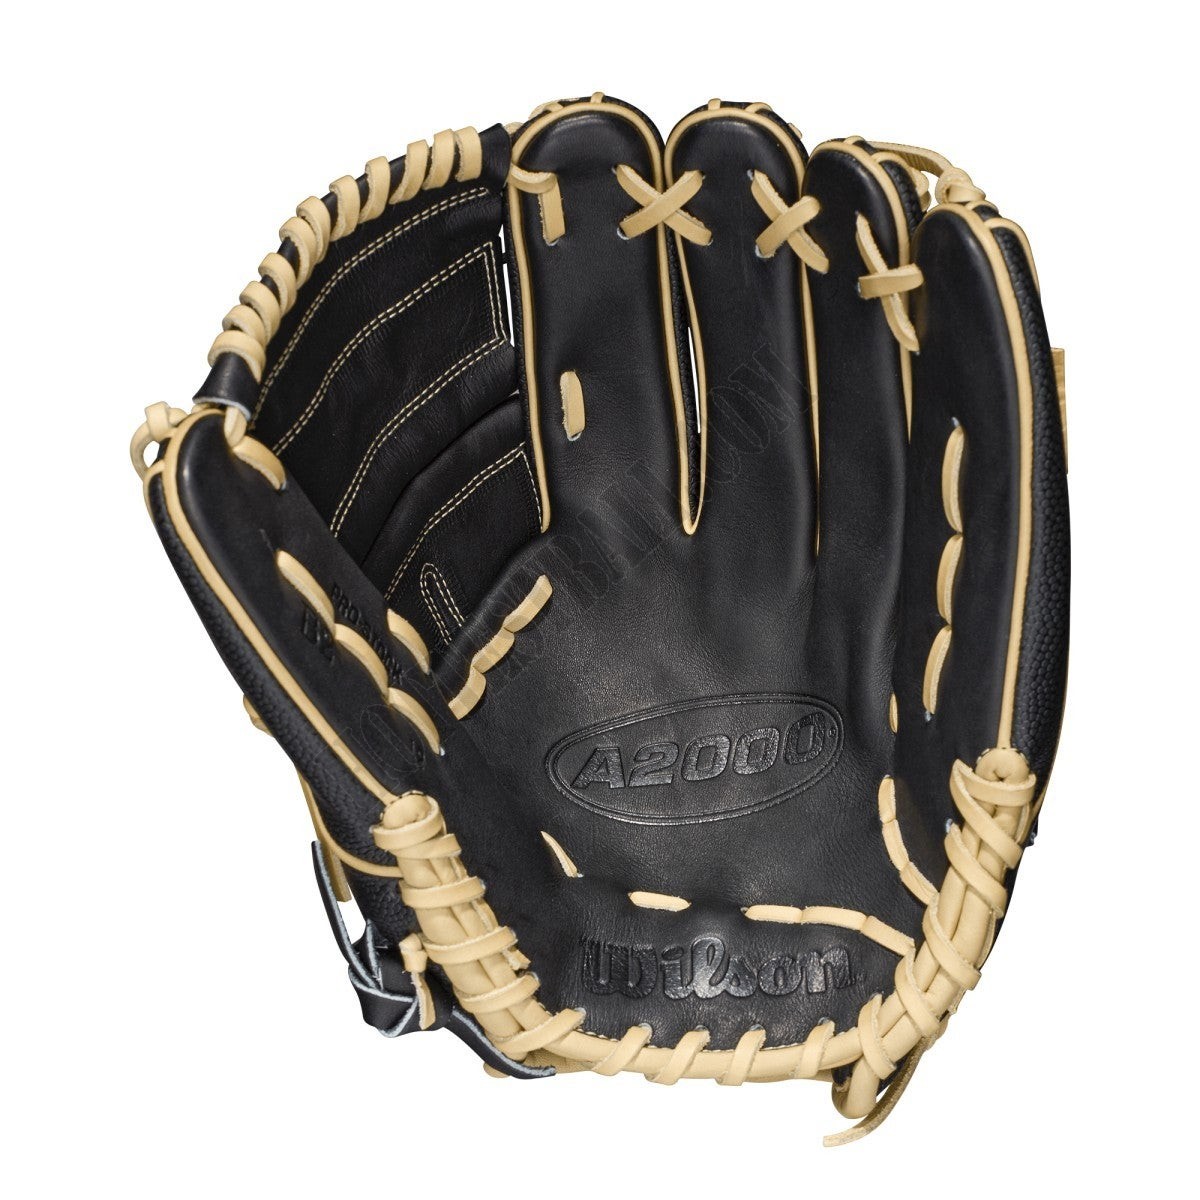 2021 A2000 B2SS 12" Pitcher's Baseball Glove ● Wilson Promotions - -2